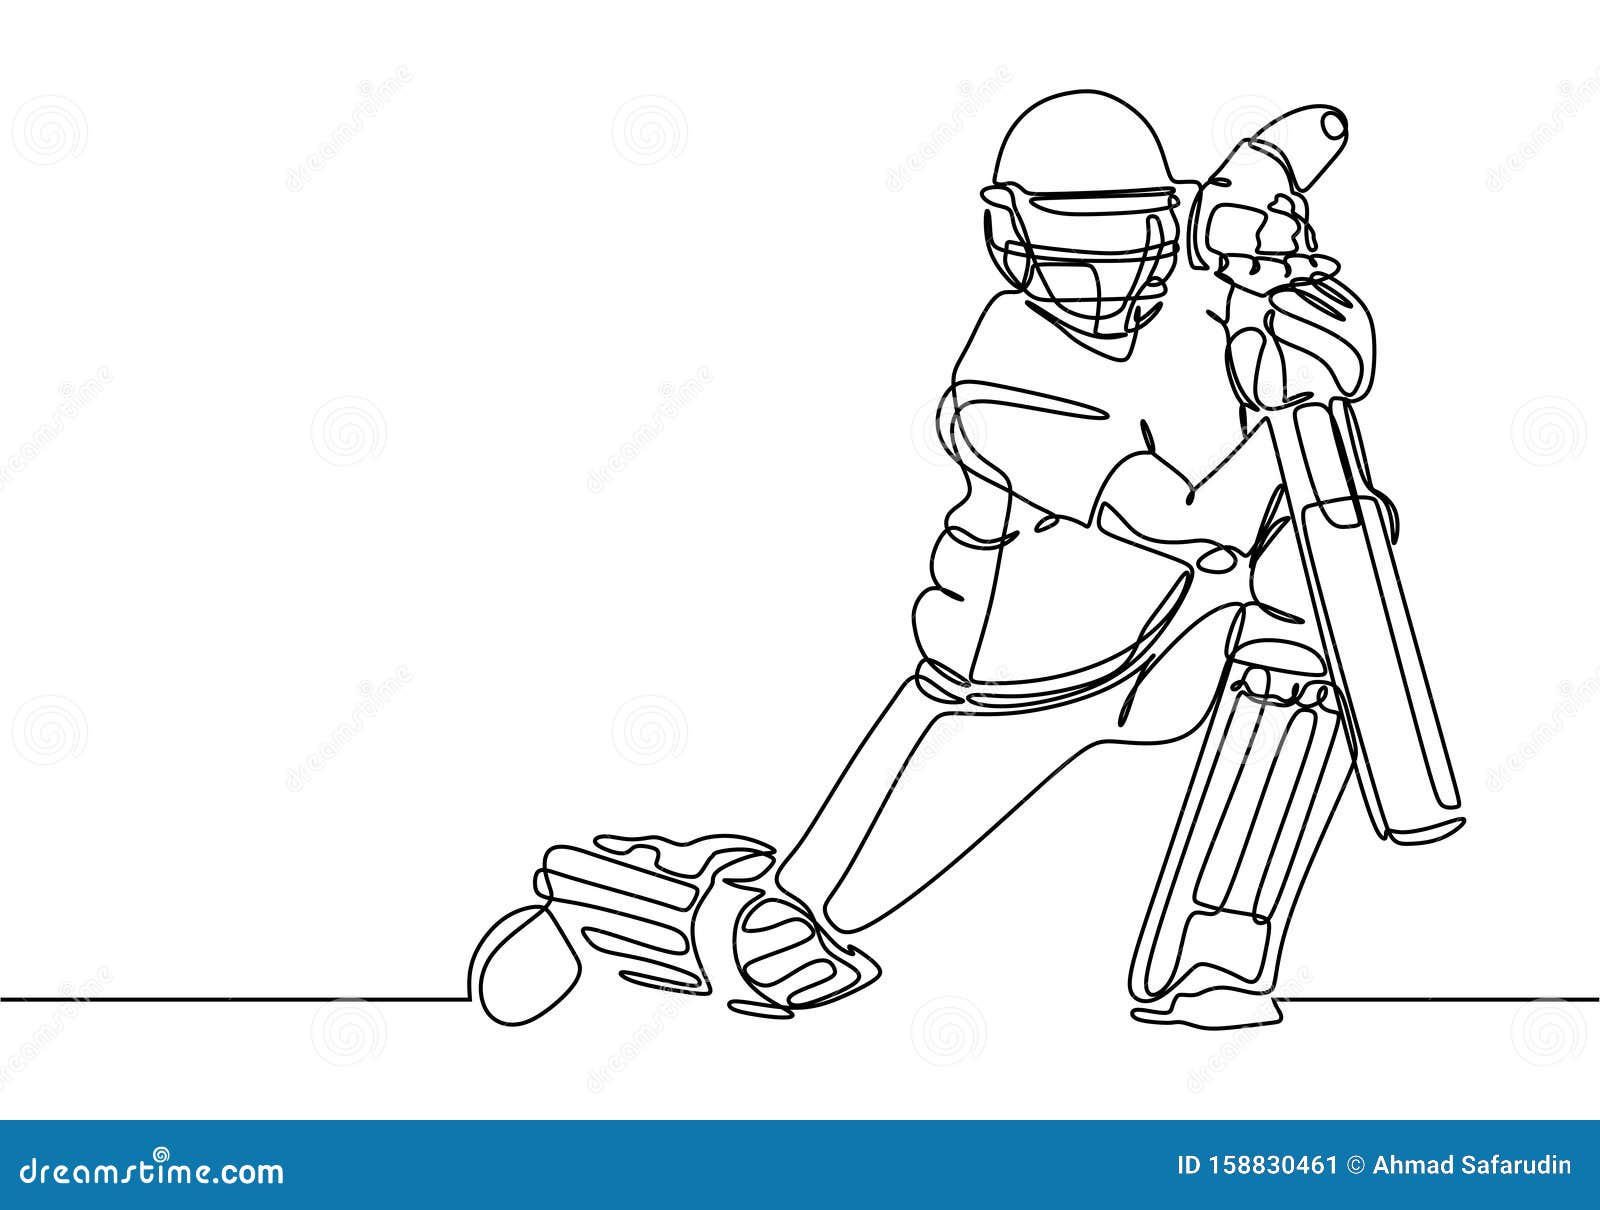 How to draw a cricket batsman  YouTube